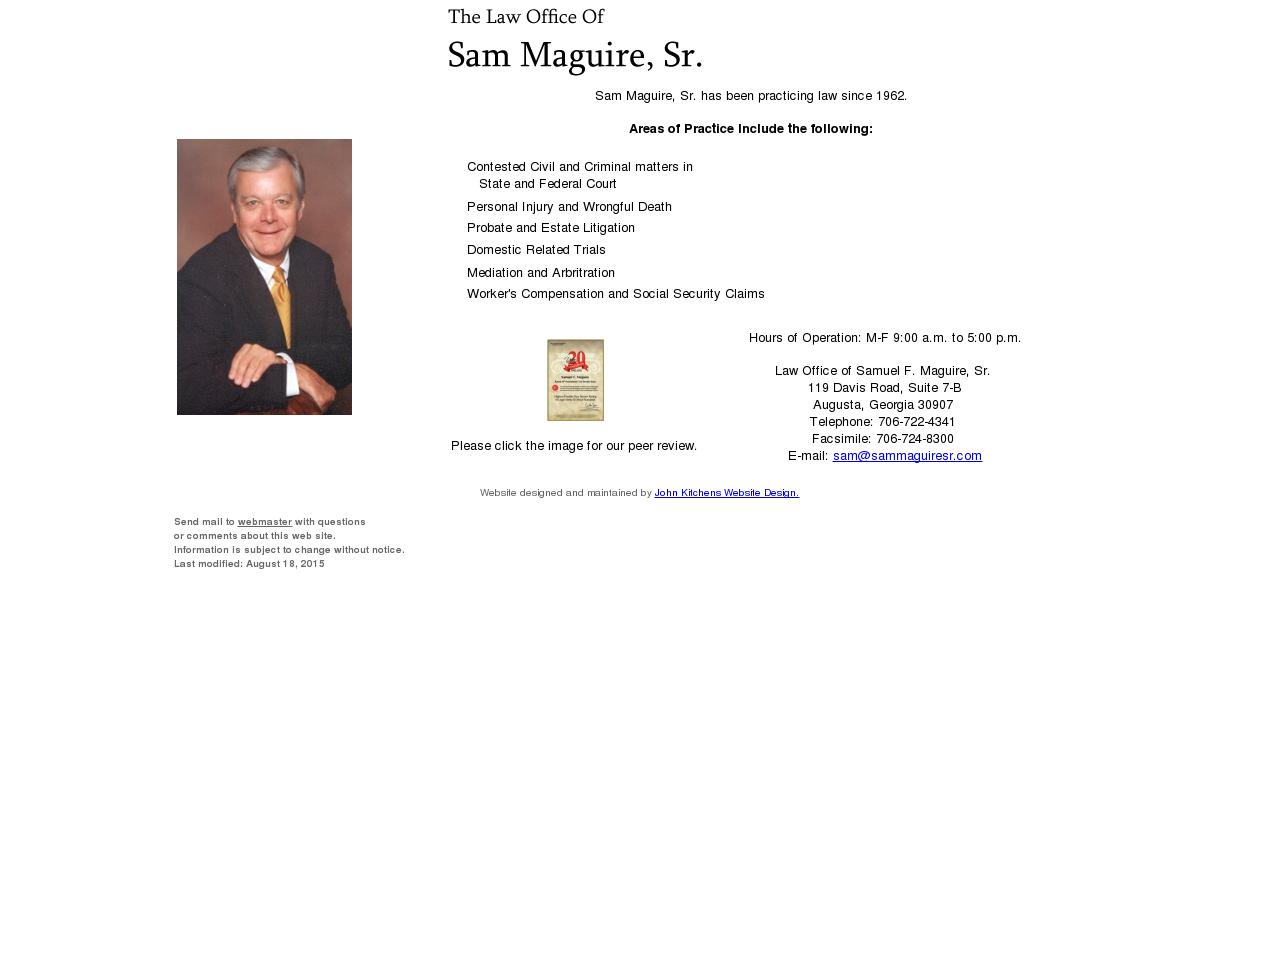 Maguire, Samuel F - Augusta GA Lawyers